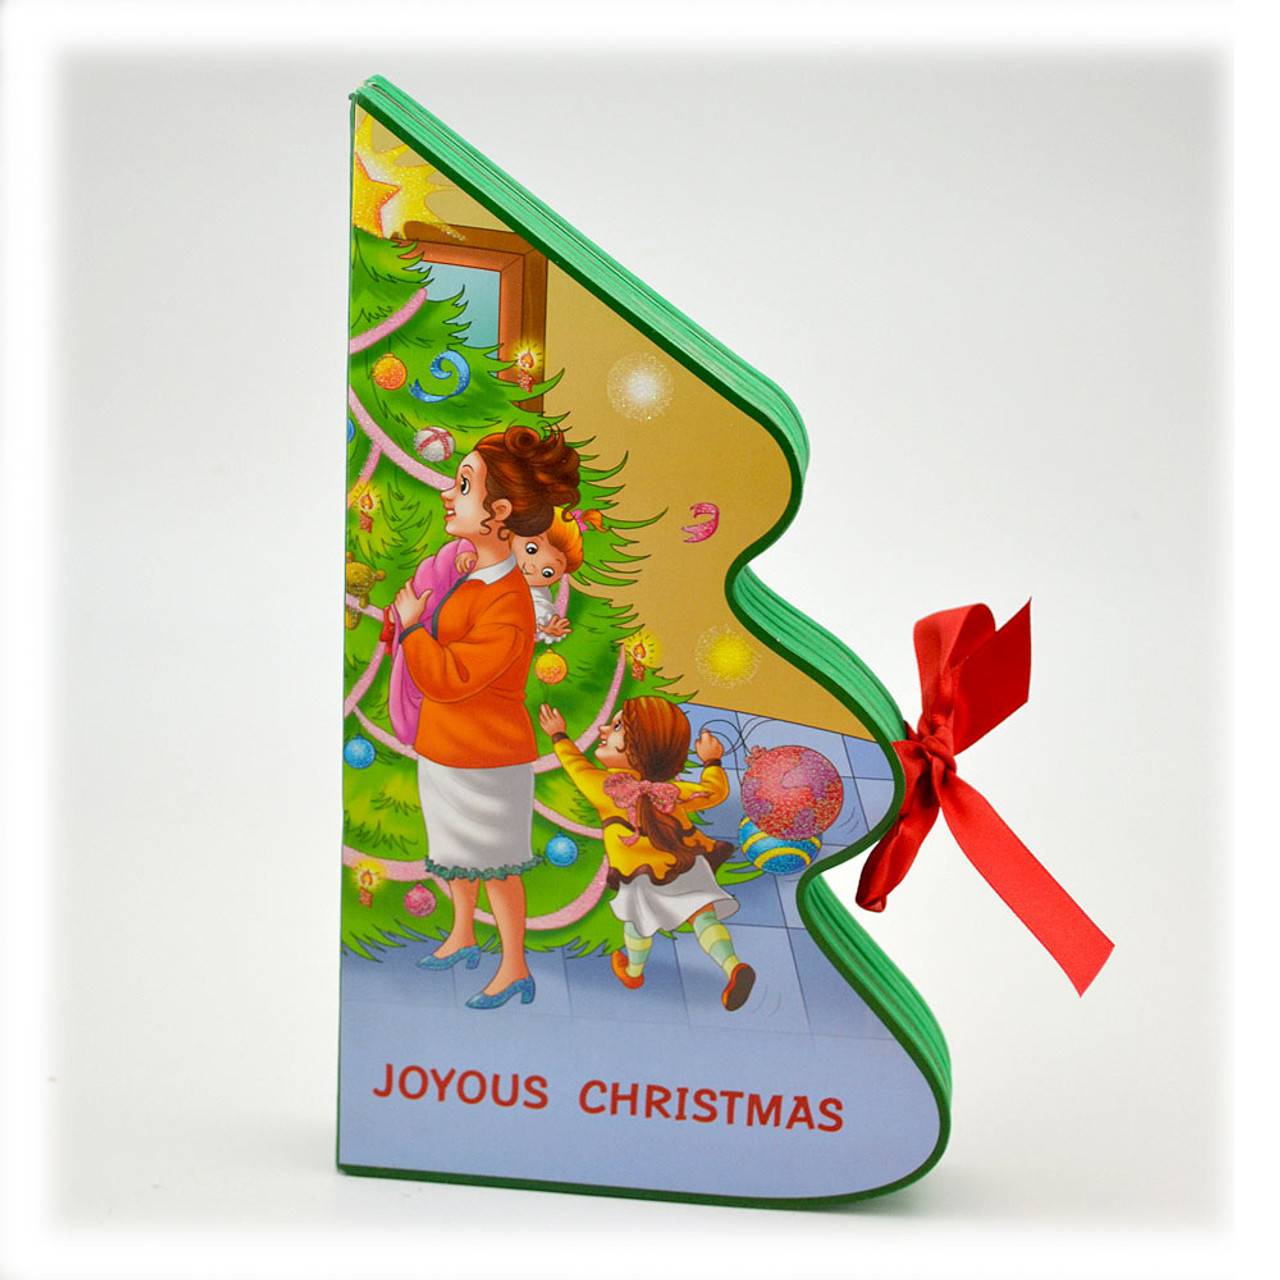 Joyous Christmas Tree-Shaped Book for Children